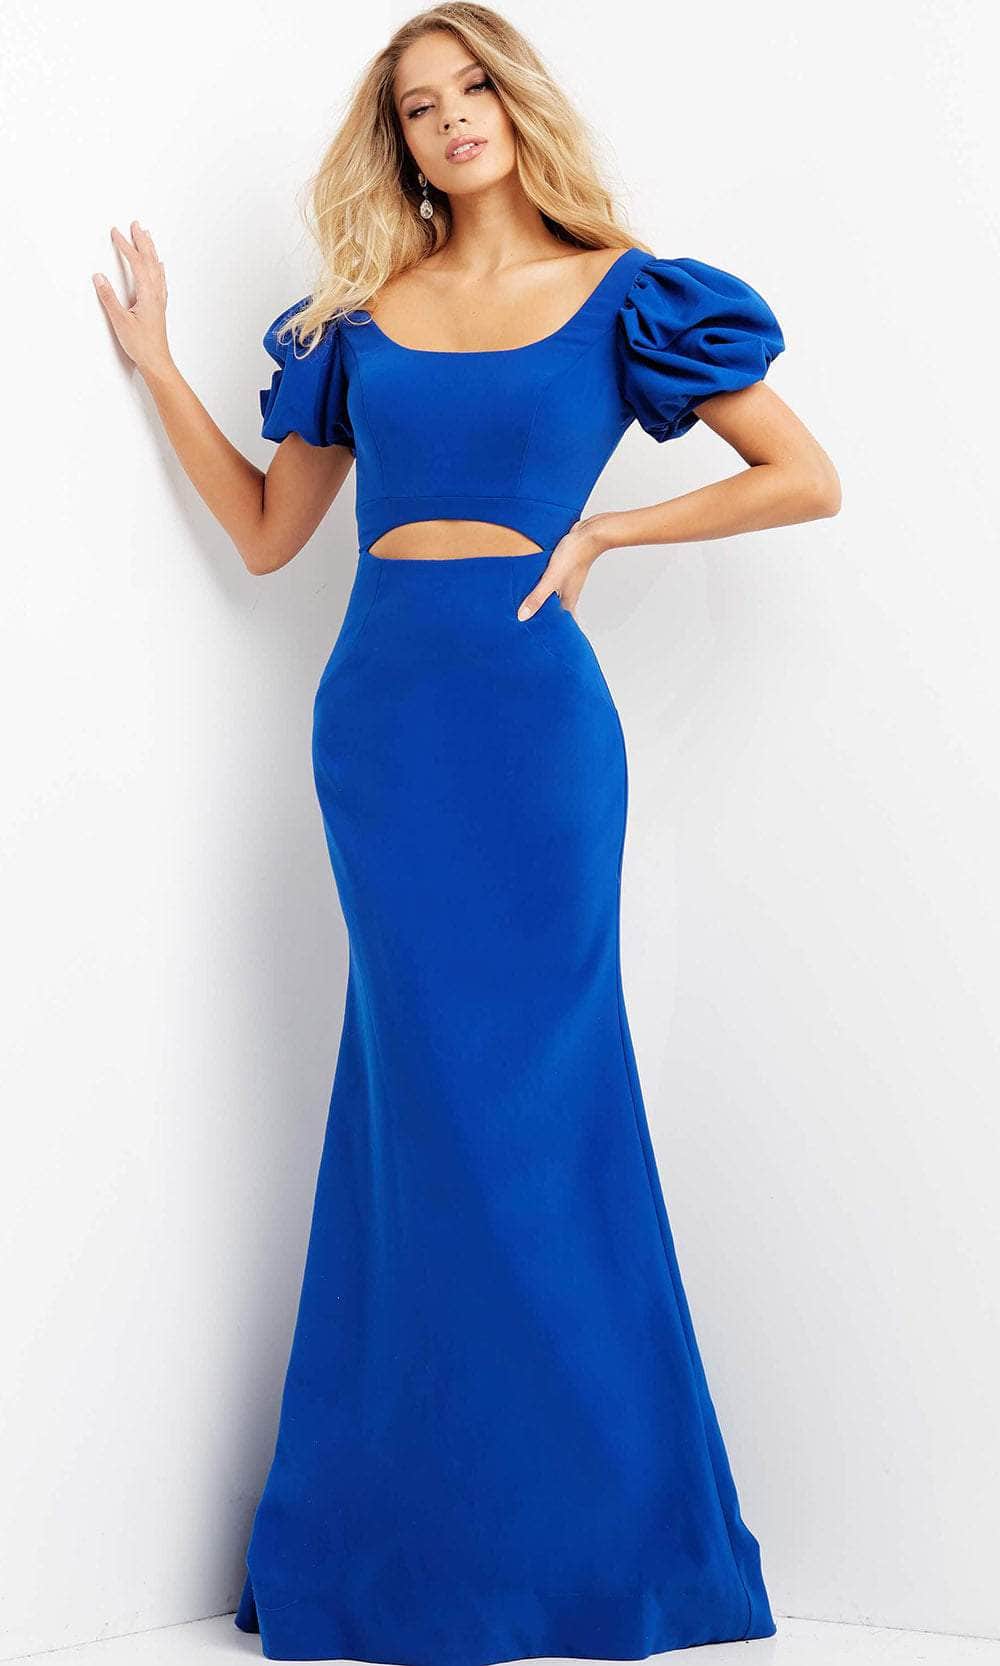 Jovani 08526 - Puff Sleeve Midriff Cutout Evening Dress Special Occasion Dress